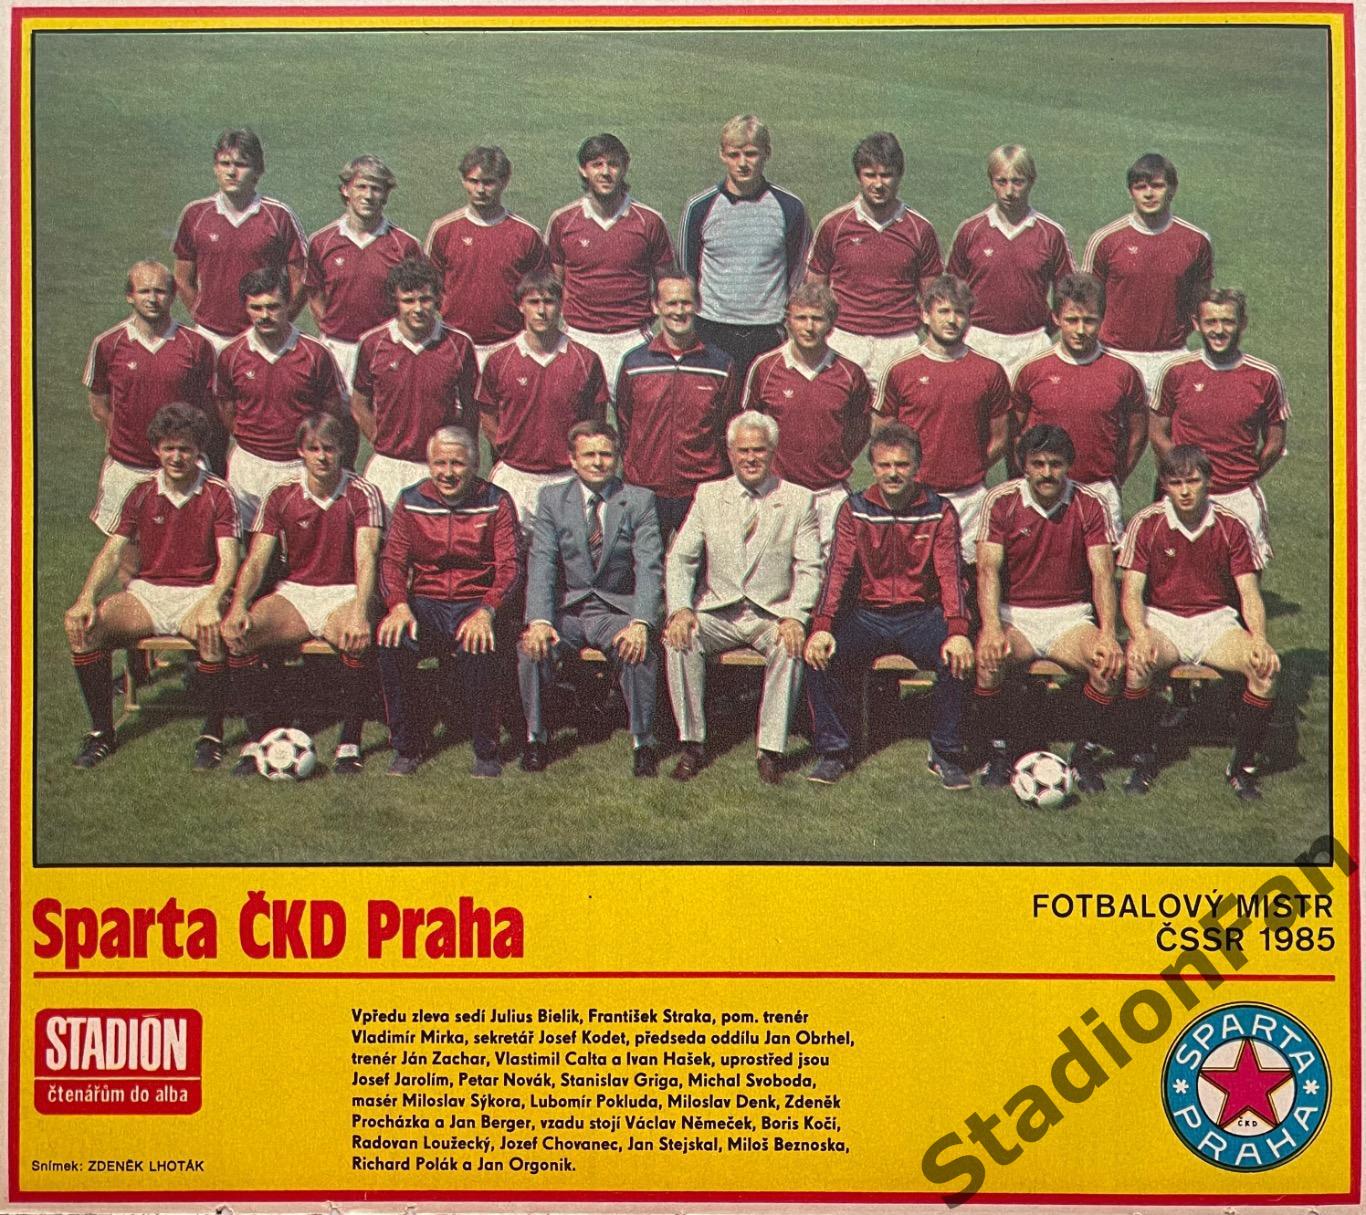 Постер из журнала Stadion (Стадион) - Sparta Praha, 1985.